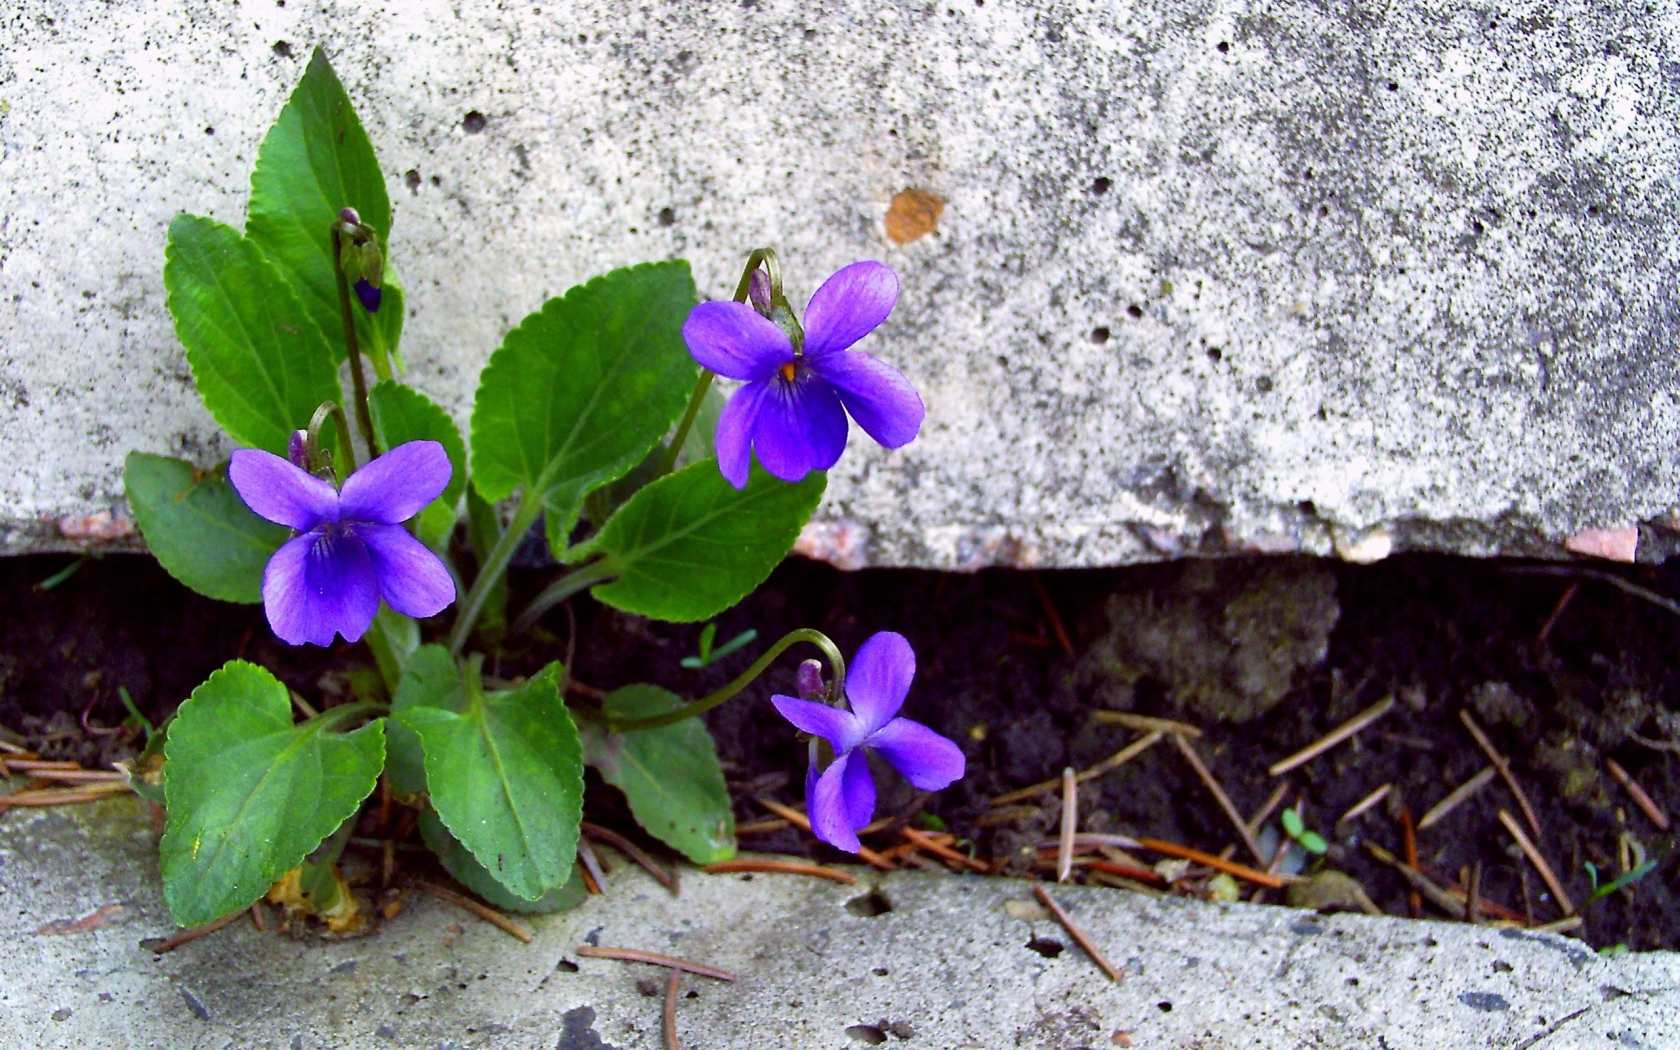 Flowers between the concrete slabs